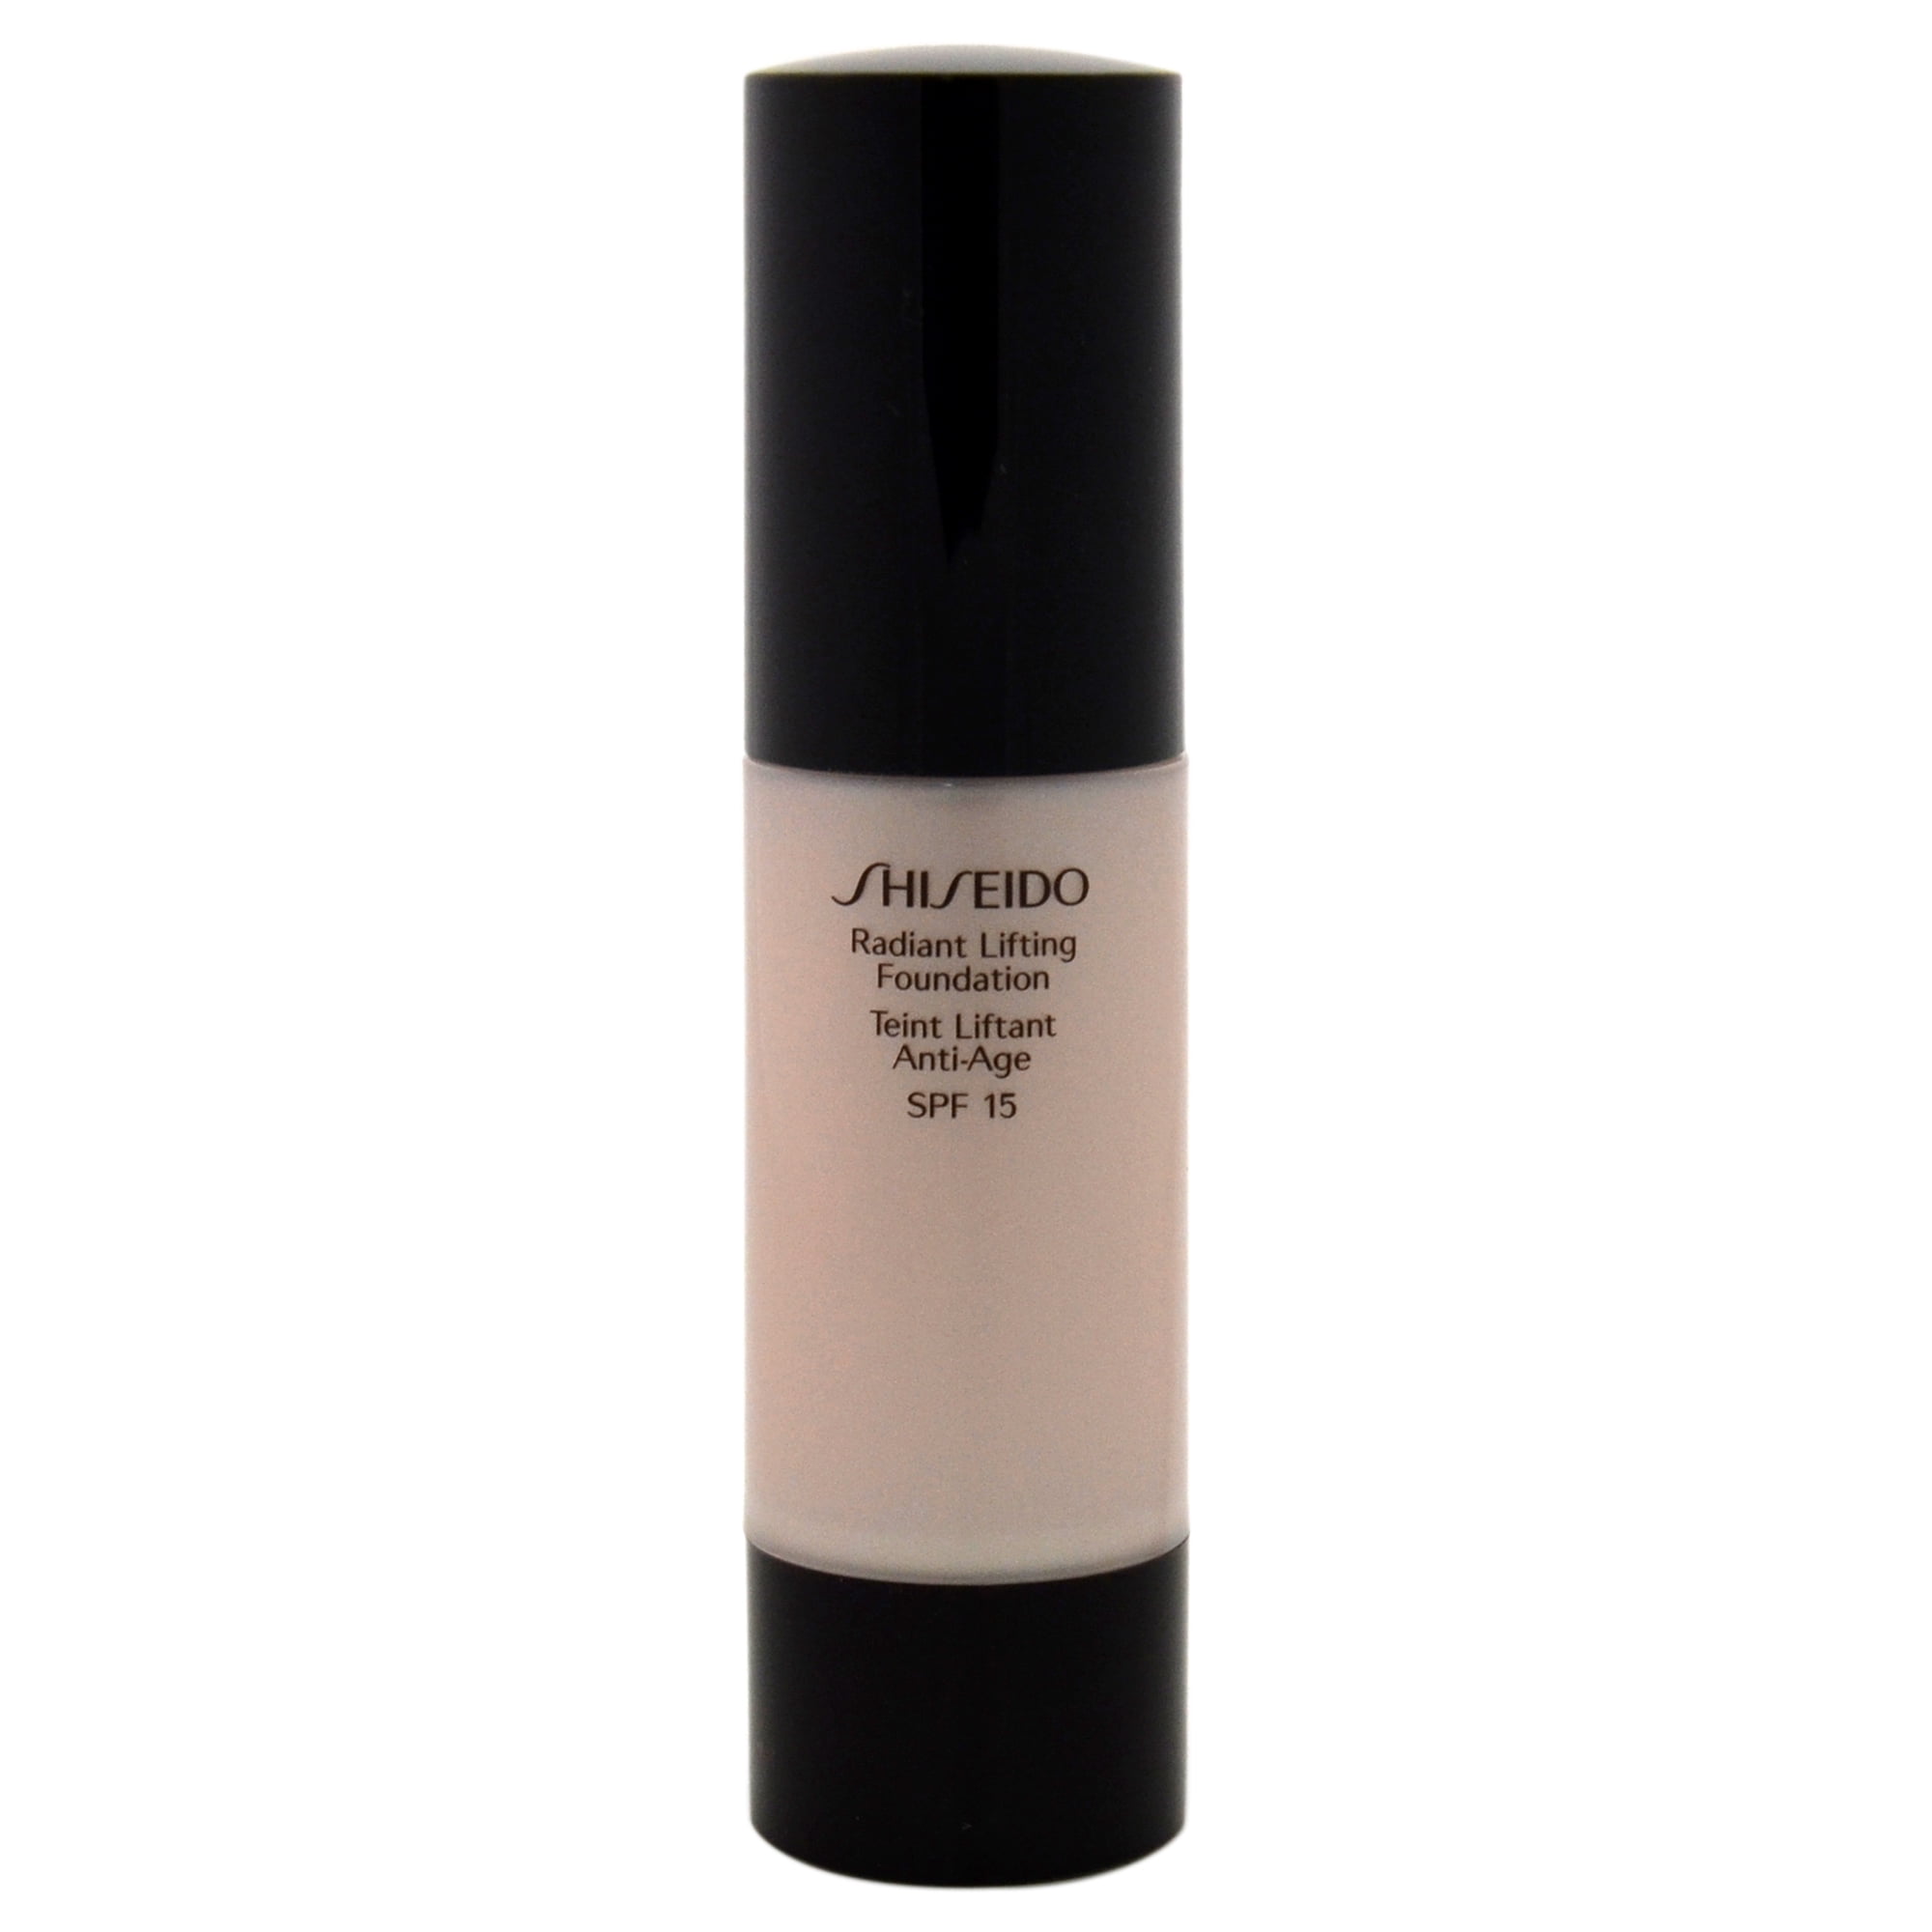 Shiseido radiant lifting. Shiseido тональный крем Radiant Lifting Foundation, SPF 15. Shiseido Synchro Skin Radiant Lifting Foundation с СПФ 30. Shiseido Skin Radiant Lifting оттенки. Тональный крем Shiseido Radiant Lifting оттенки.